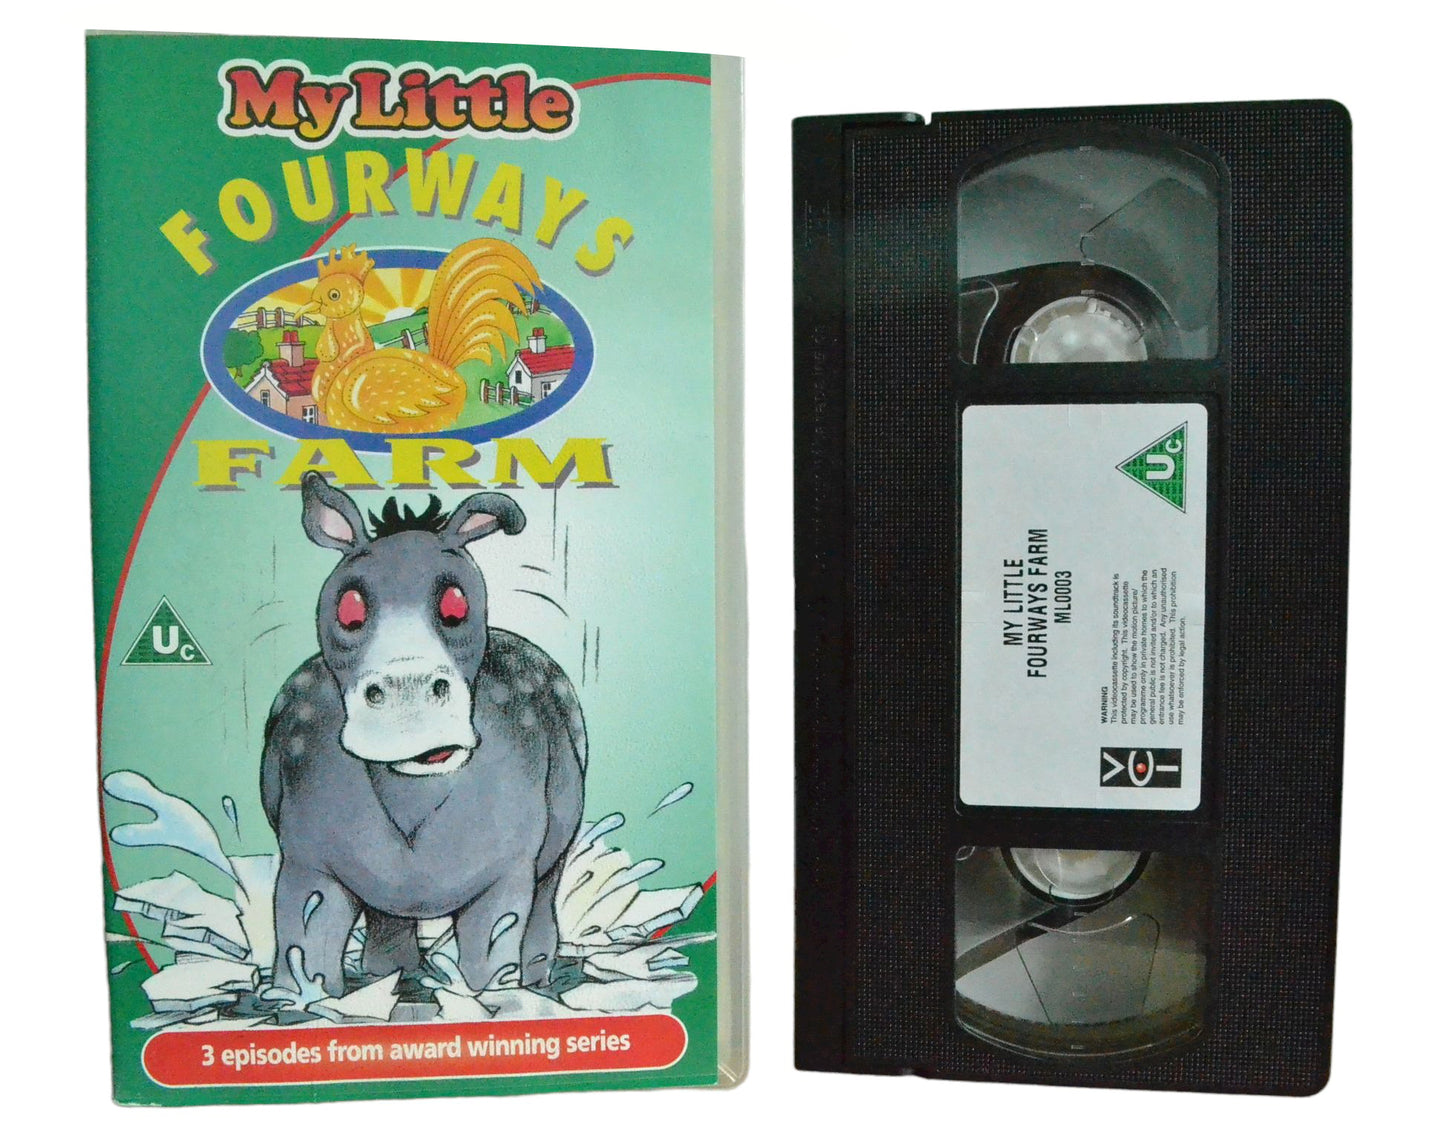 My Little Fourways Farm - VCI - Childrens - Pal VHS-